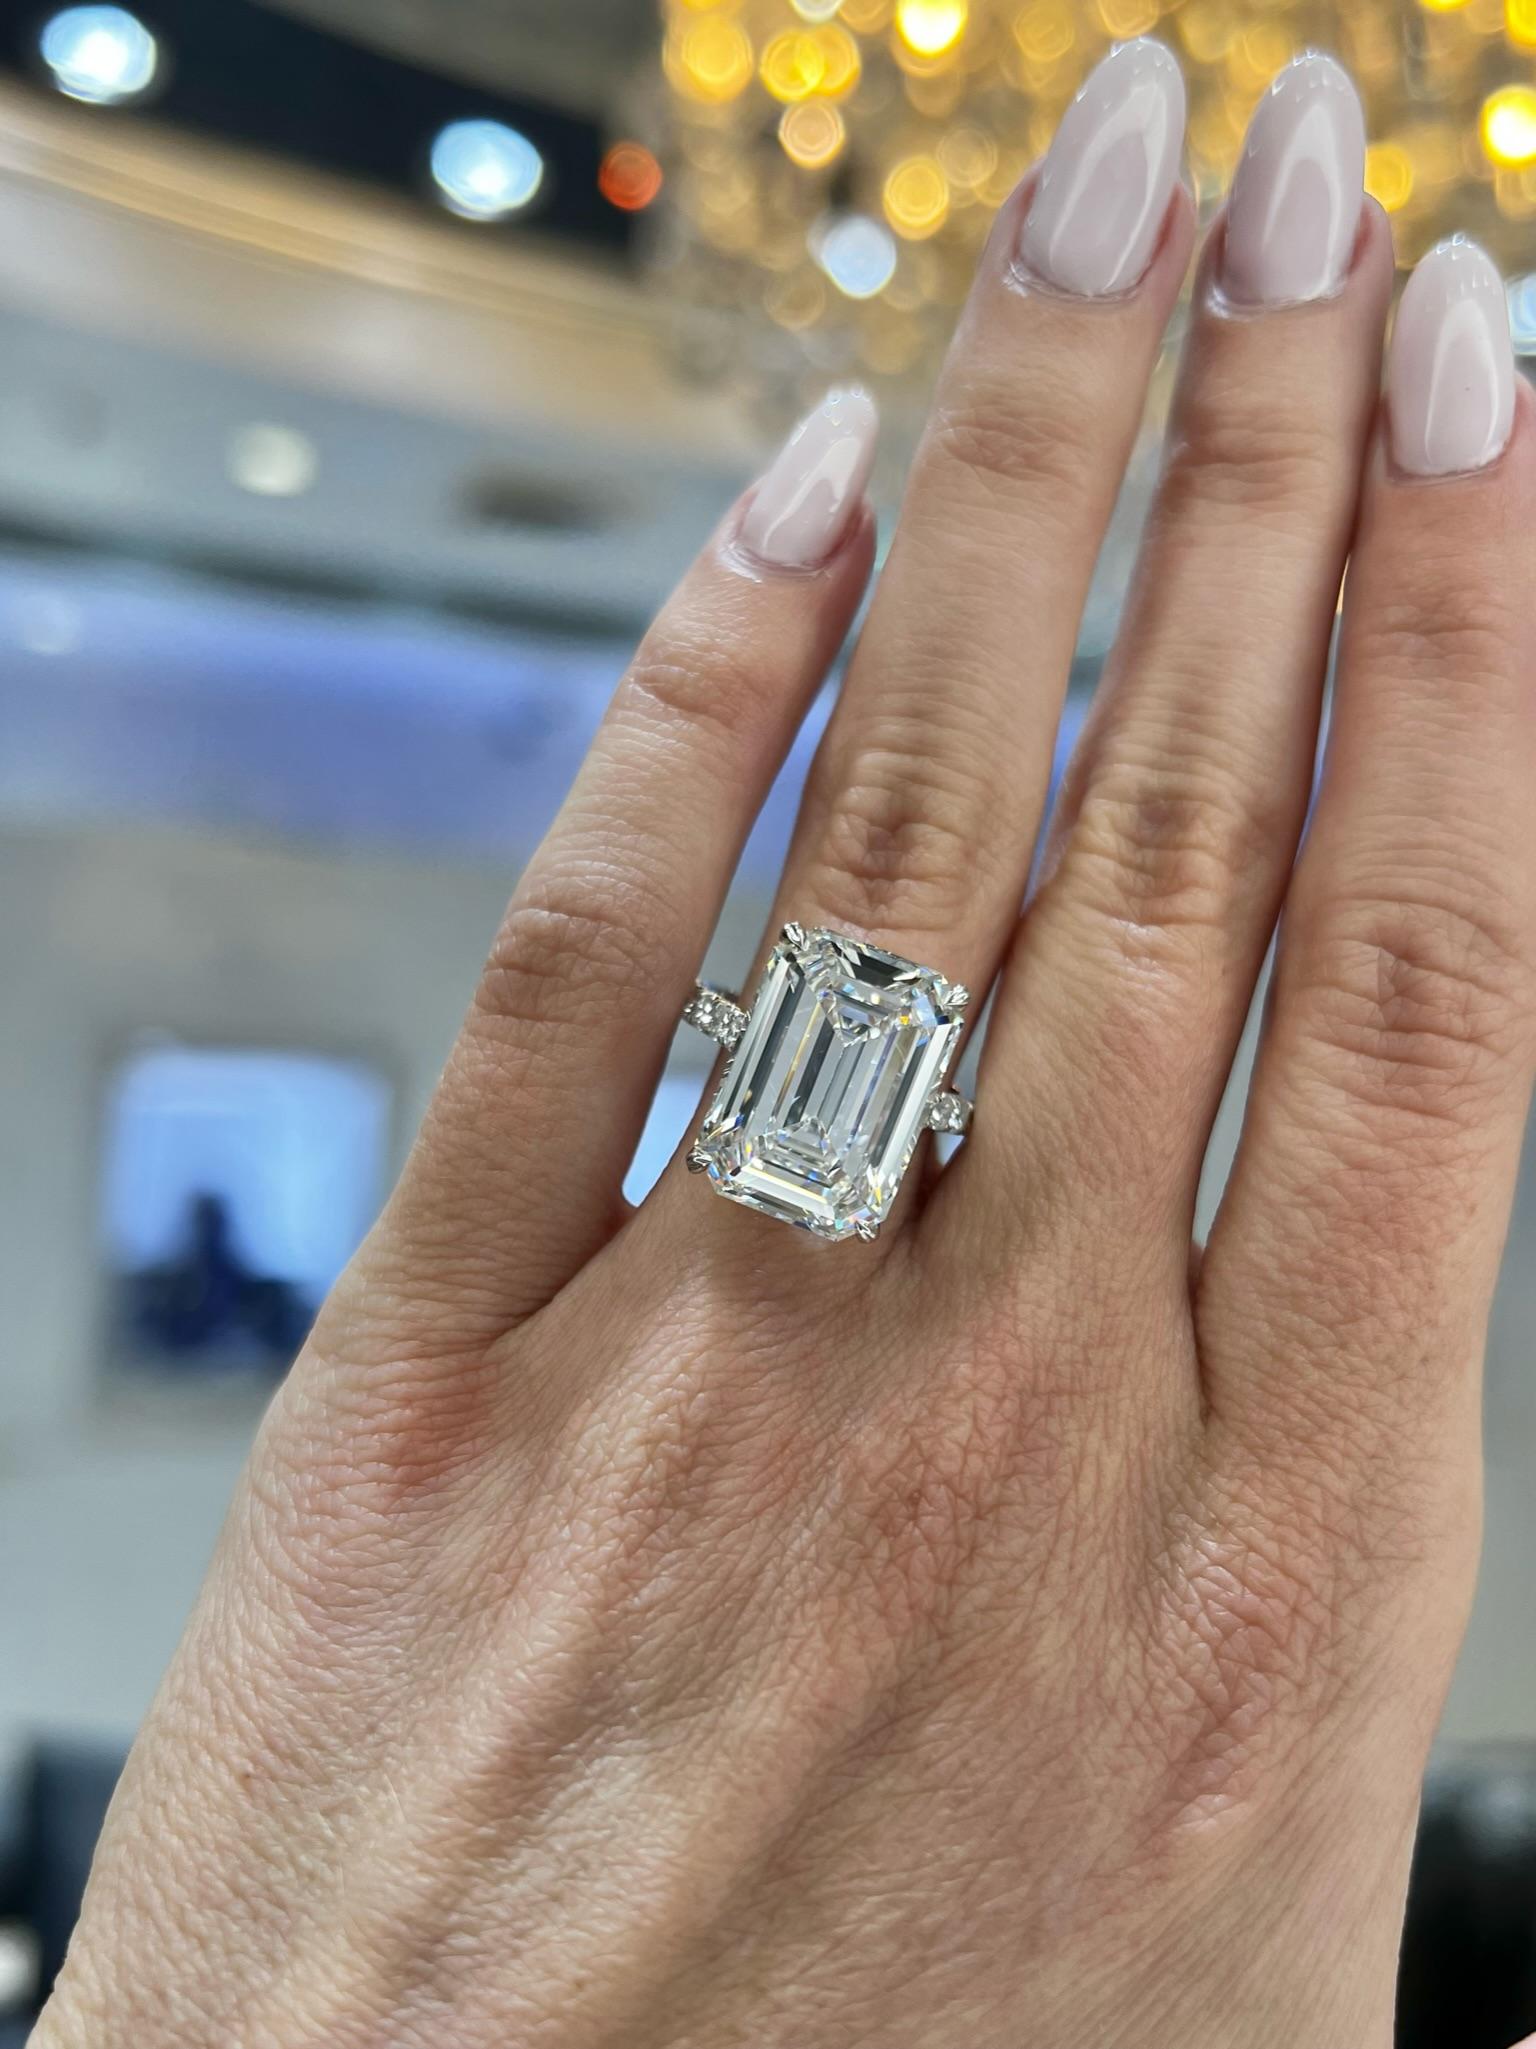 David Rosenberg 10.41 Carat Emerald Cut F VVS2 GIA Diamond Engagement Ring For Sale 2